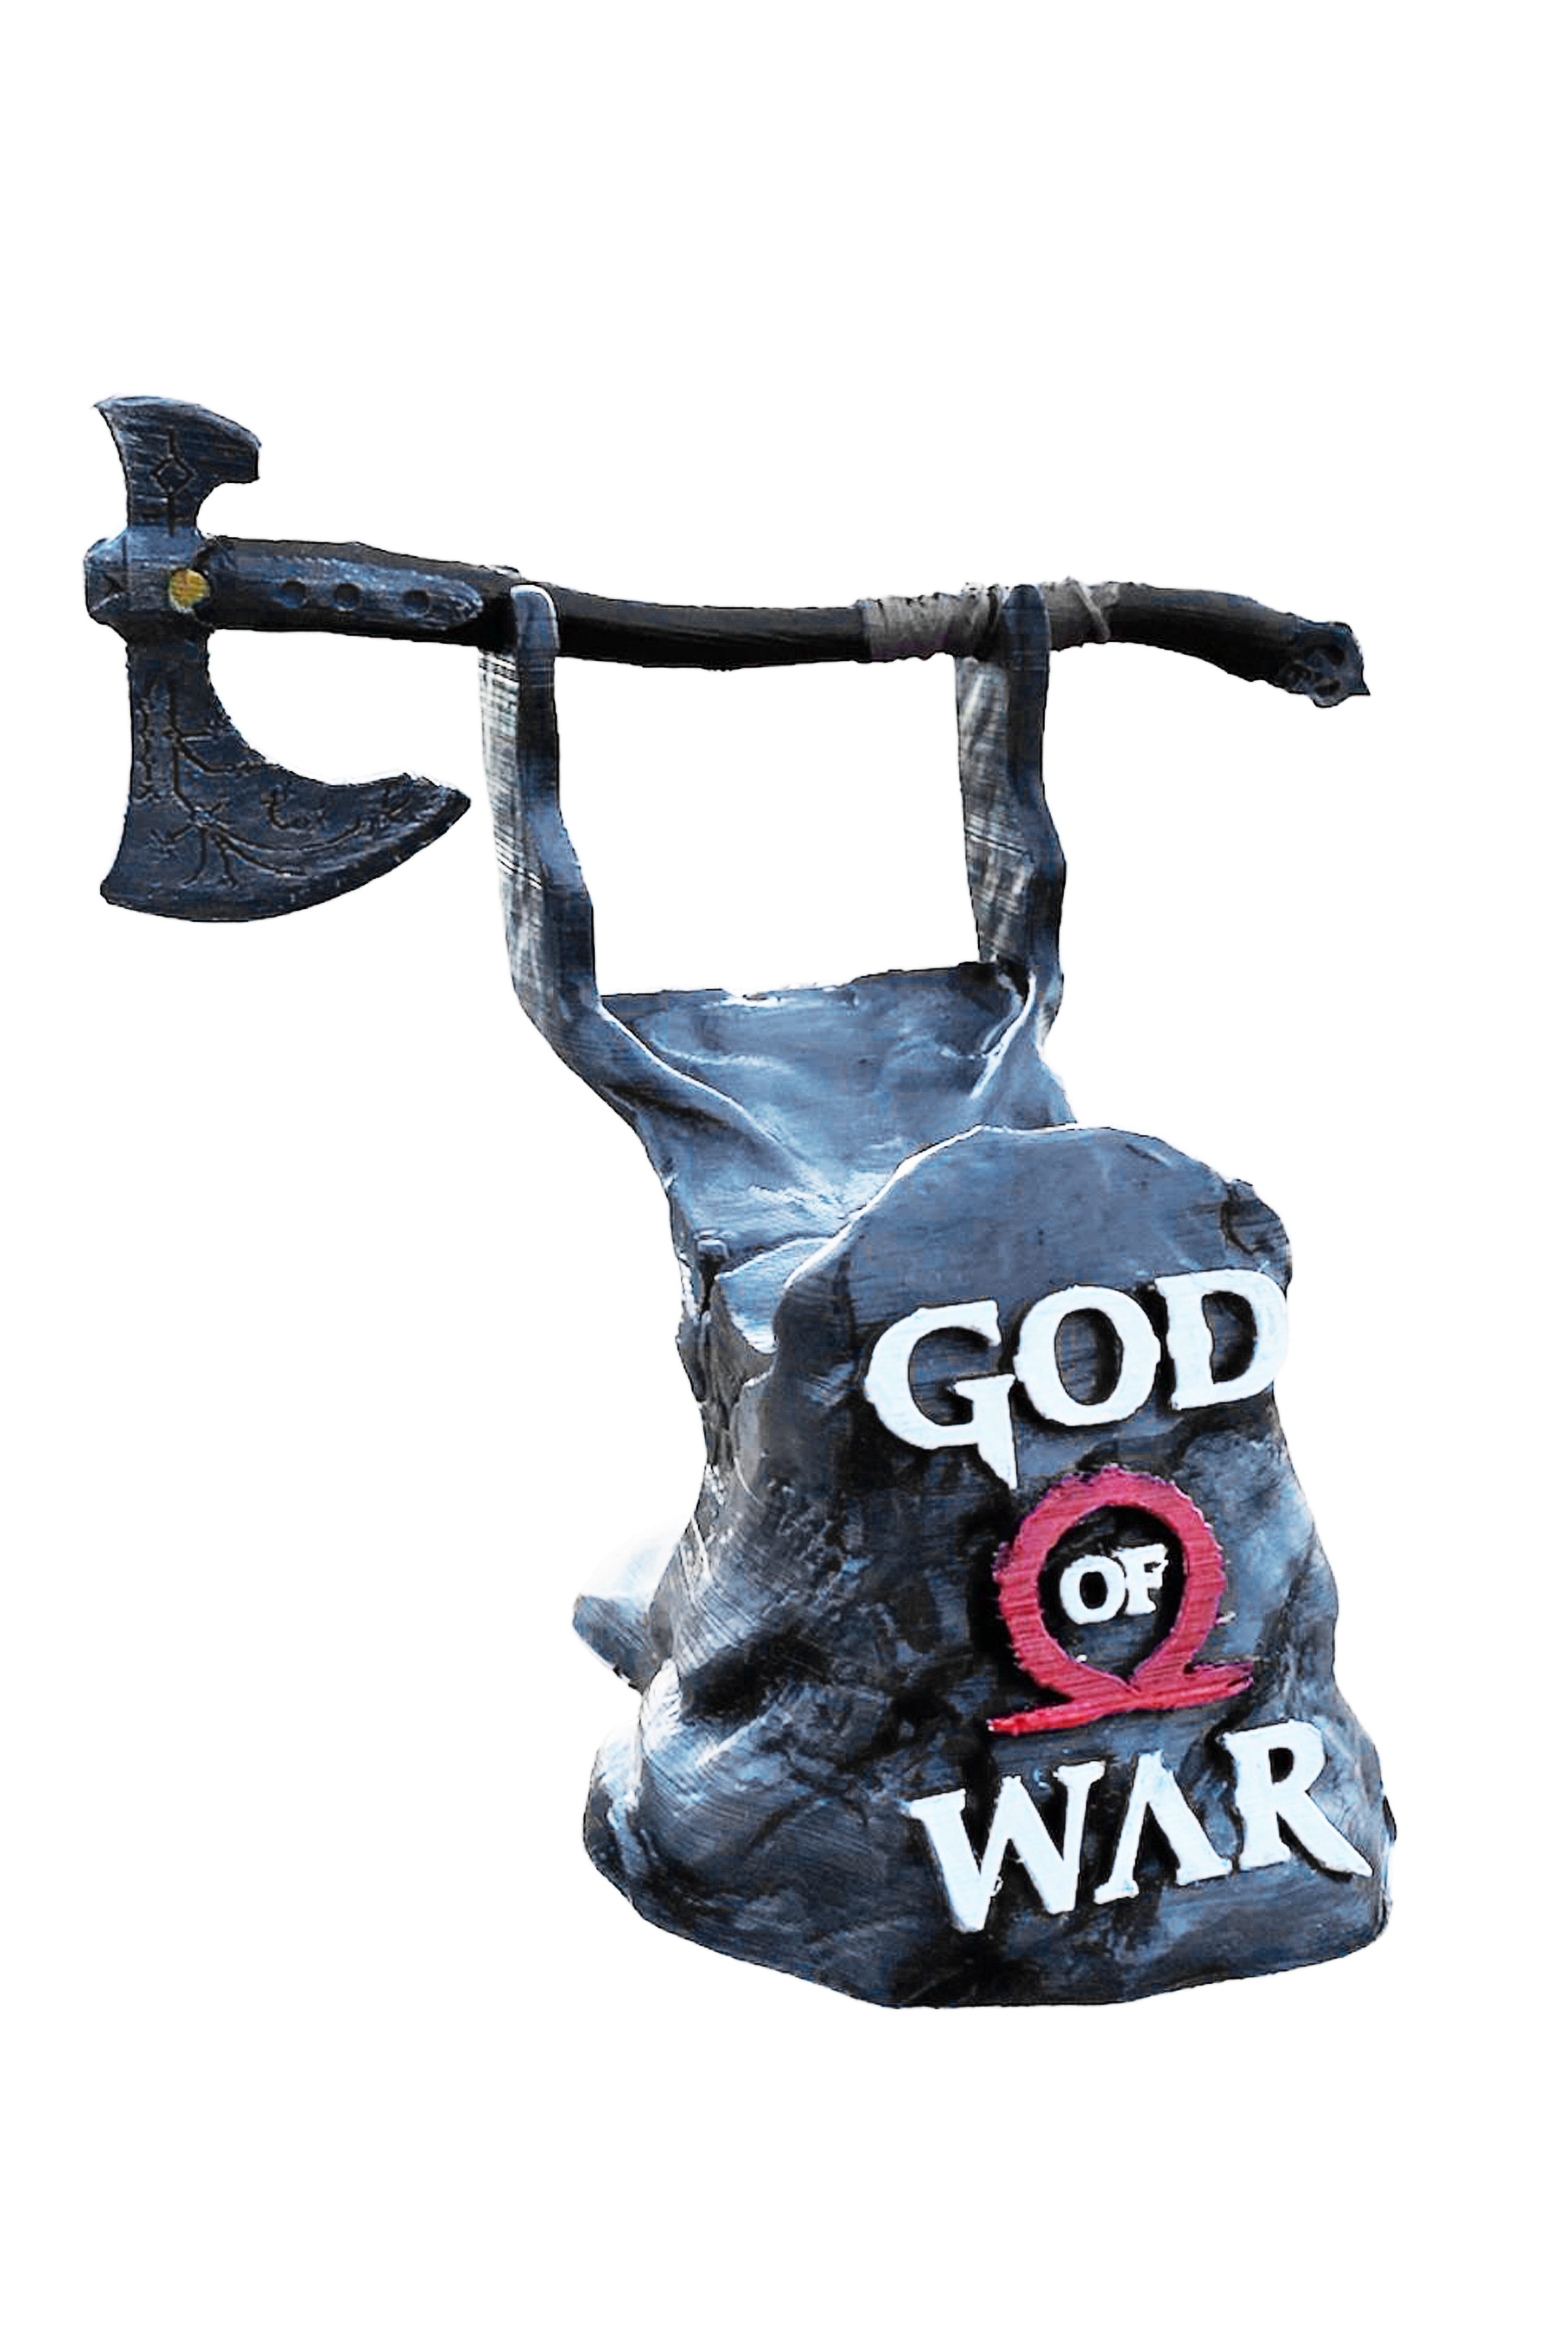 God of war Playstation Controls Arm Stand